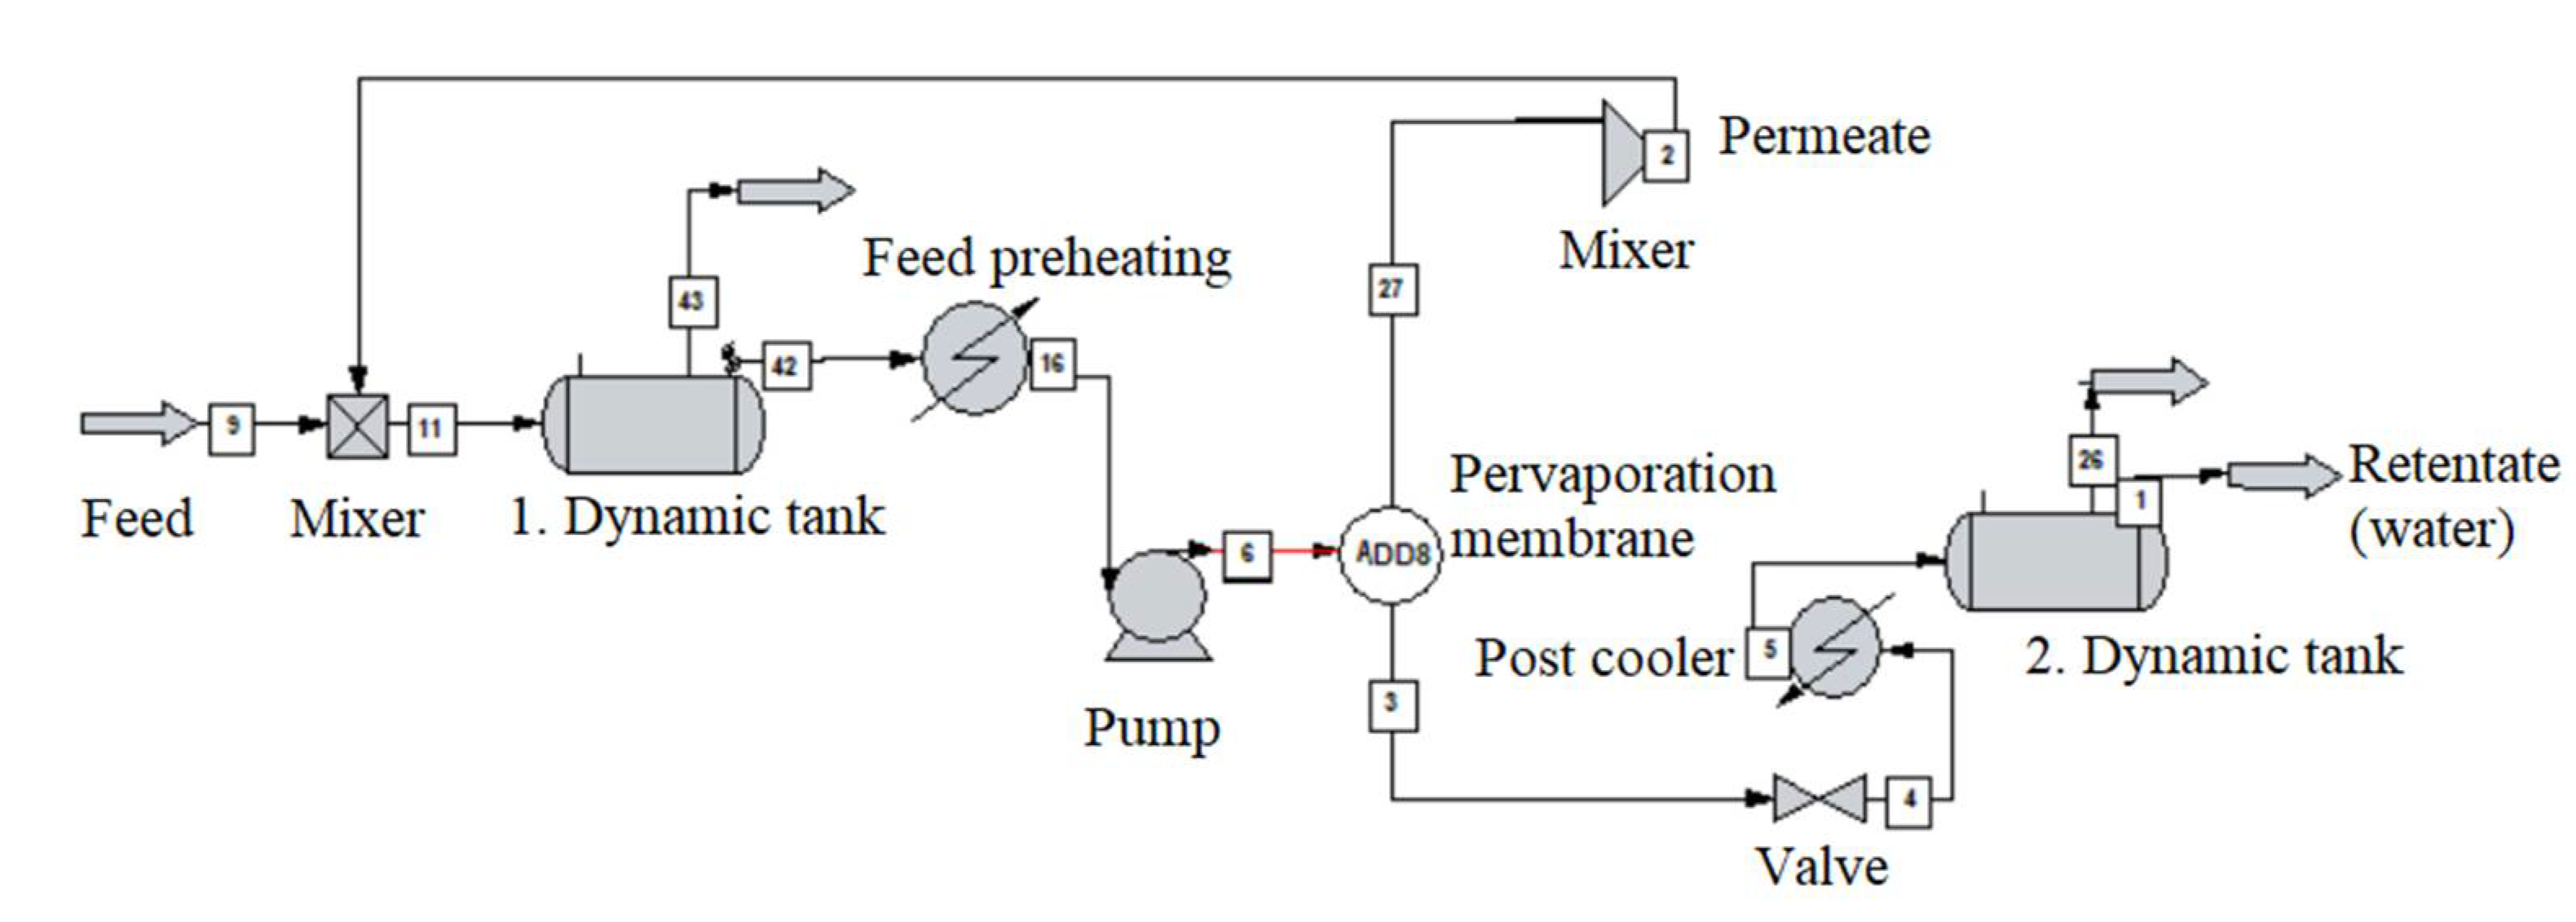 microfiltration pro ii simulation